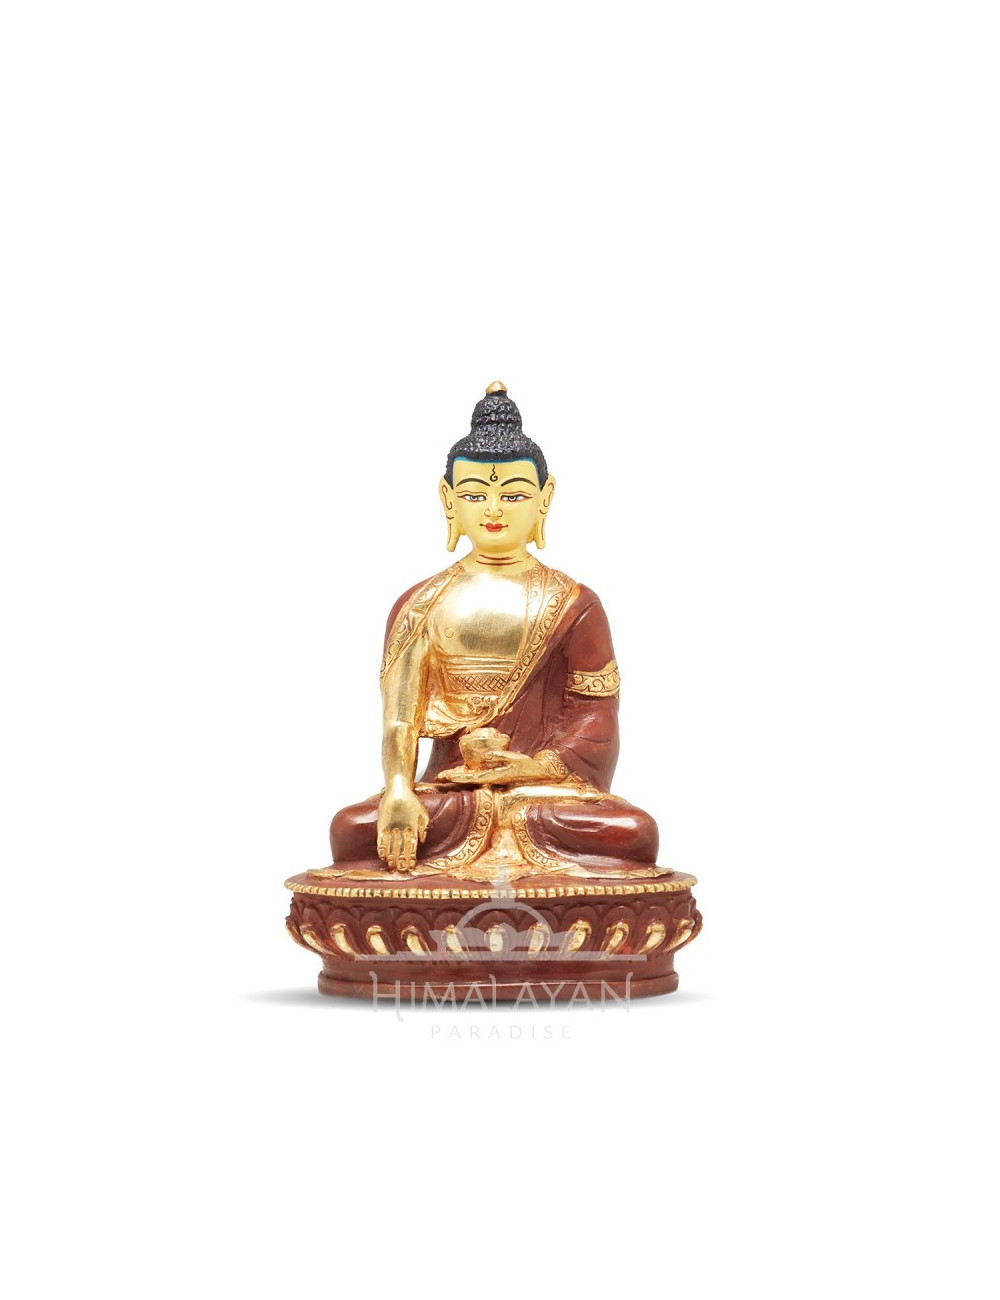 Estatua bronce Buda Shakyamuni